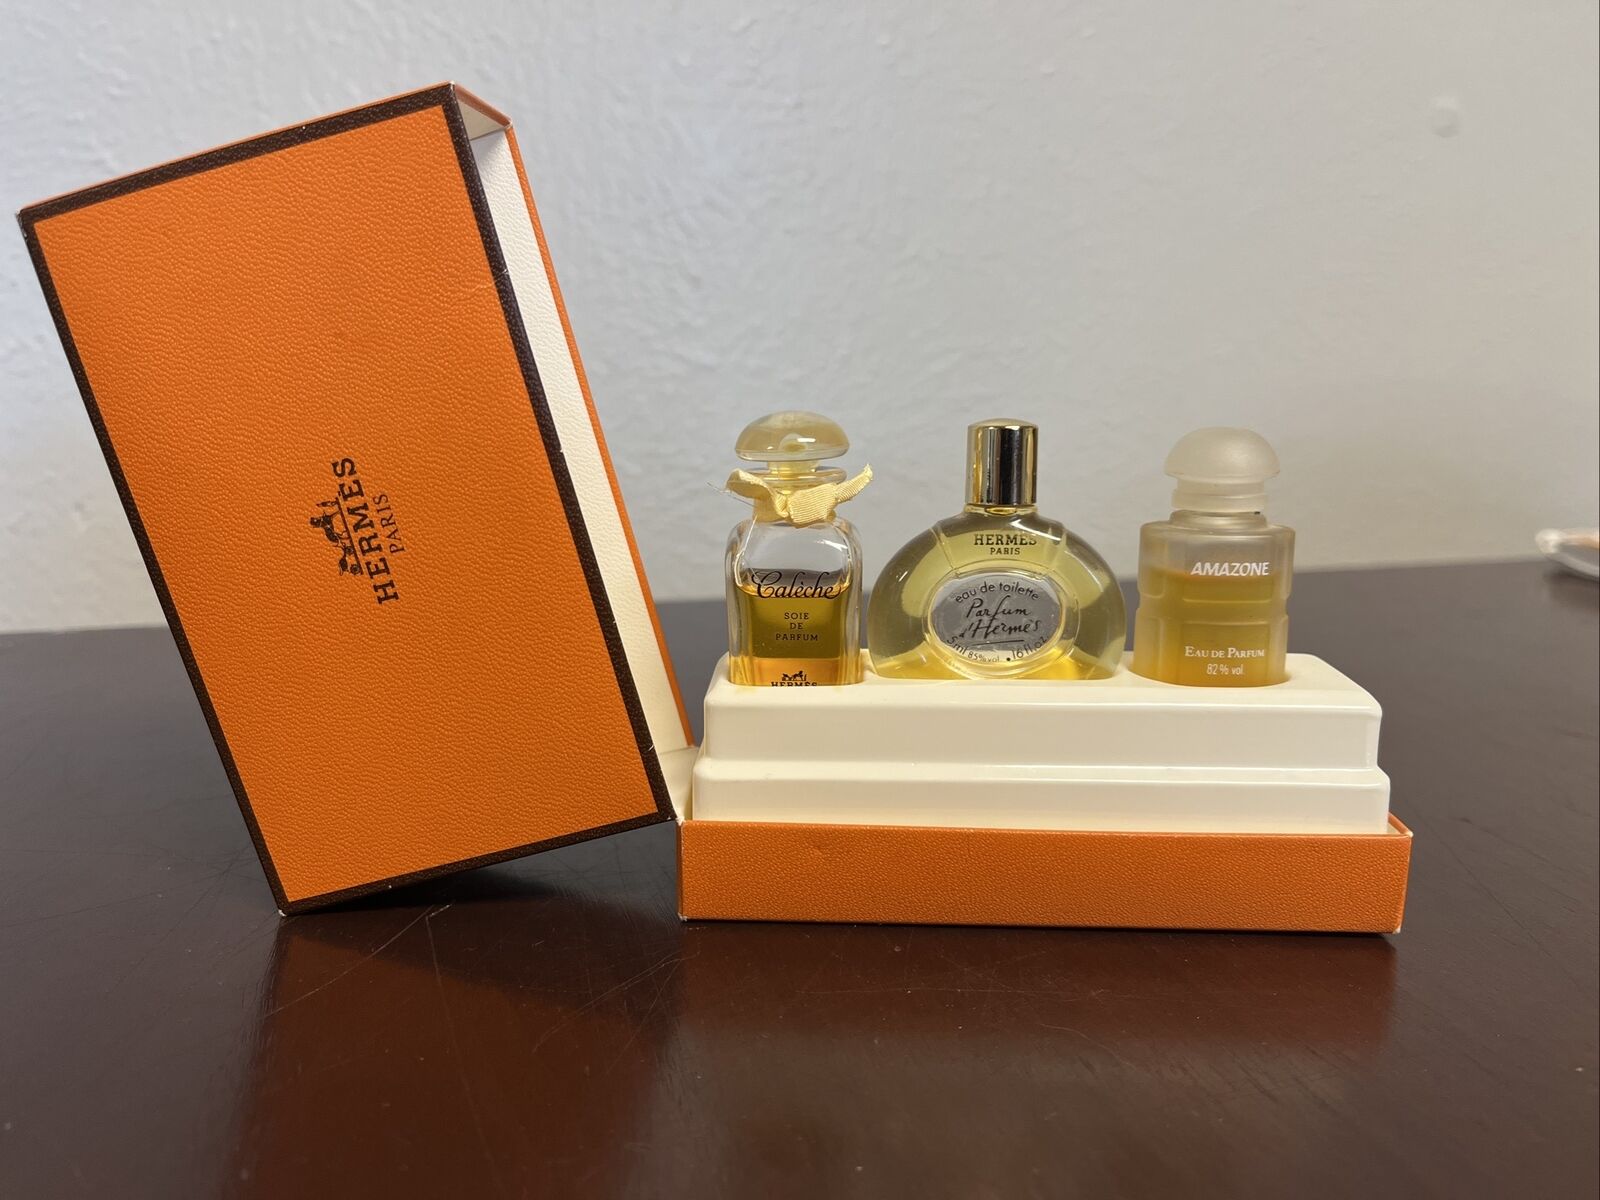 3 miniature perfume bottles Hermes Caleche- parfum d'hermes-Amazone Rare